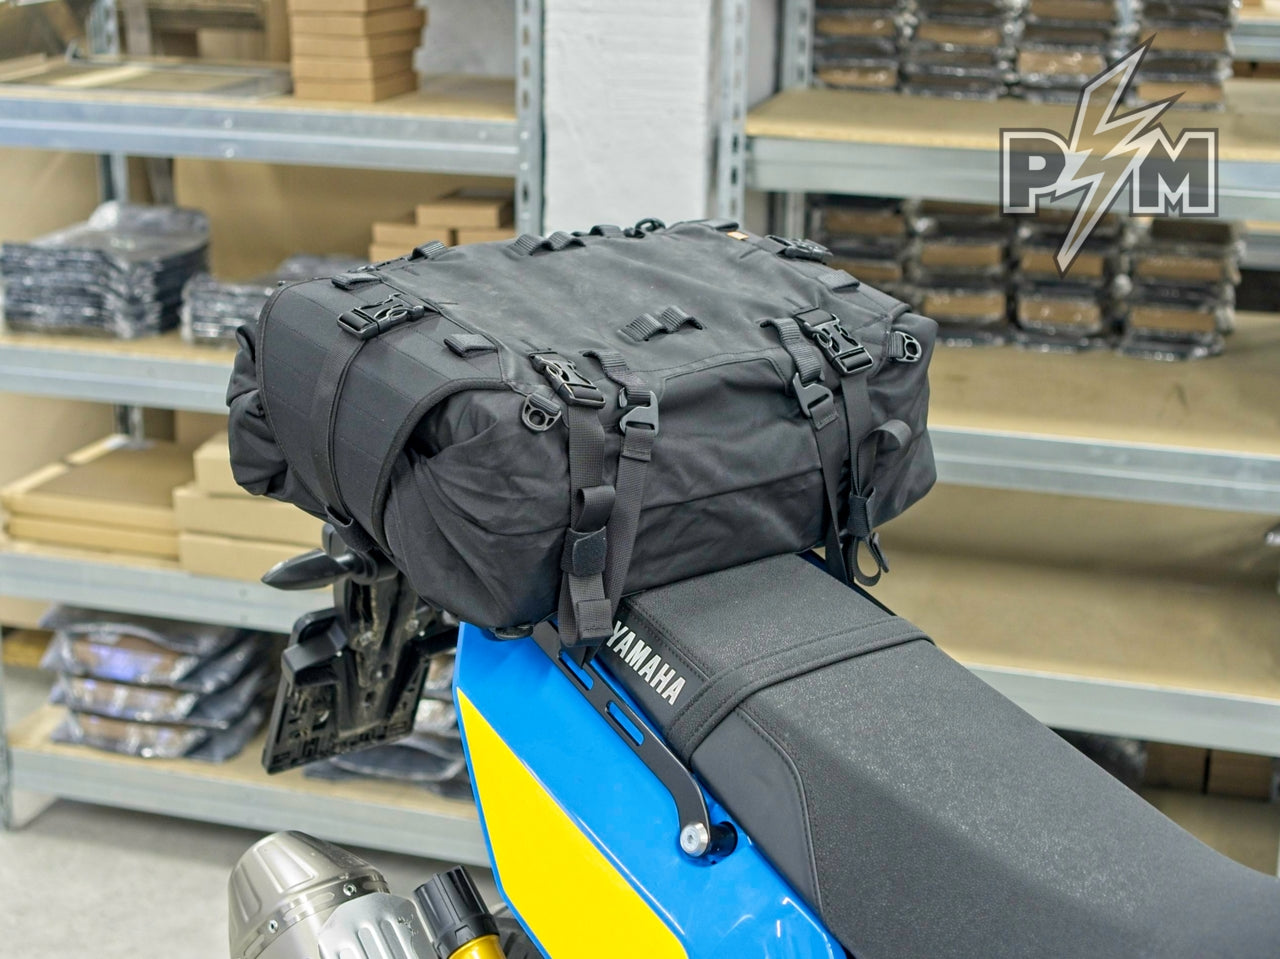 Kriega US Drypack on Yamaha Tenere 700 with Perun moto Top luggage rack